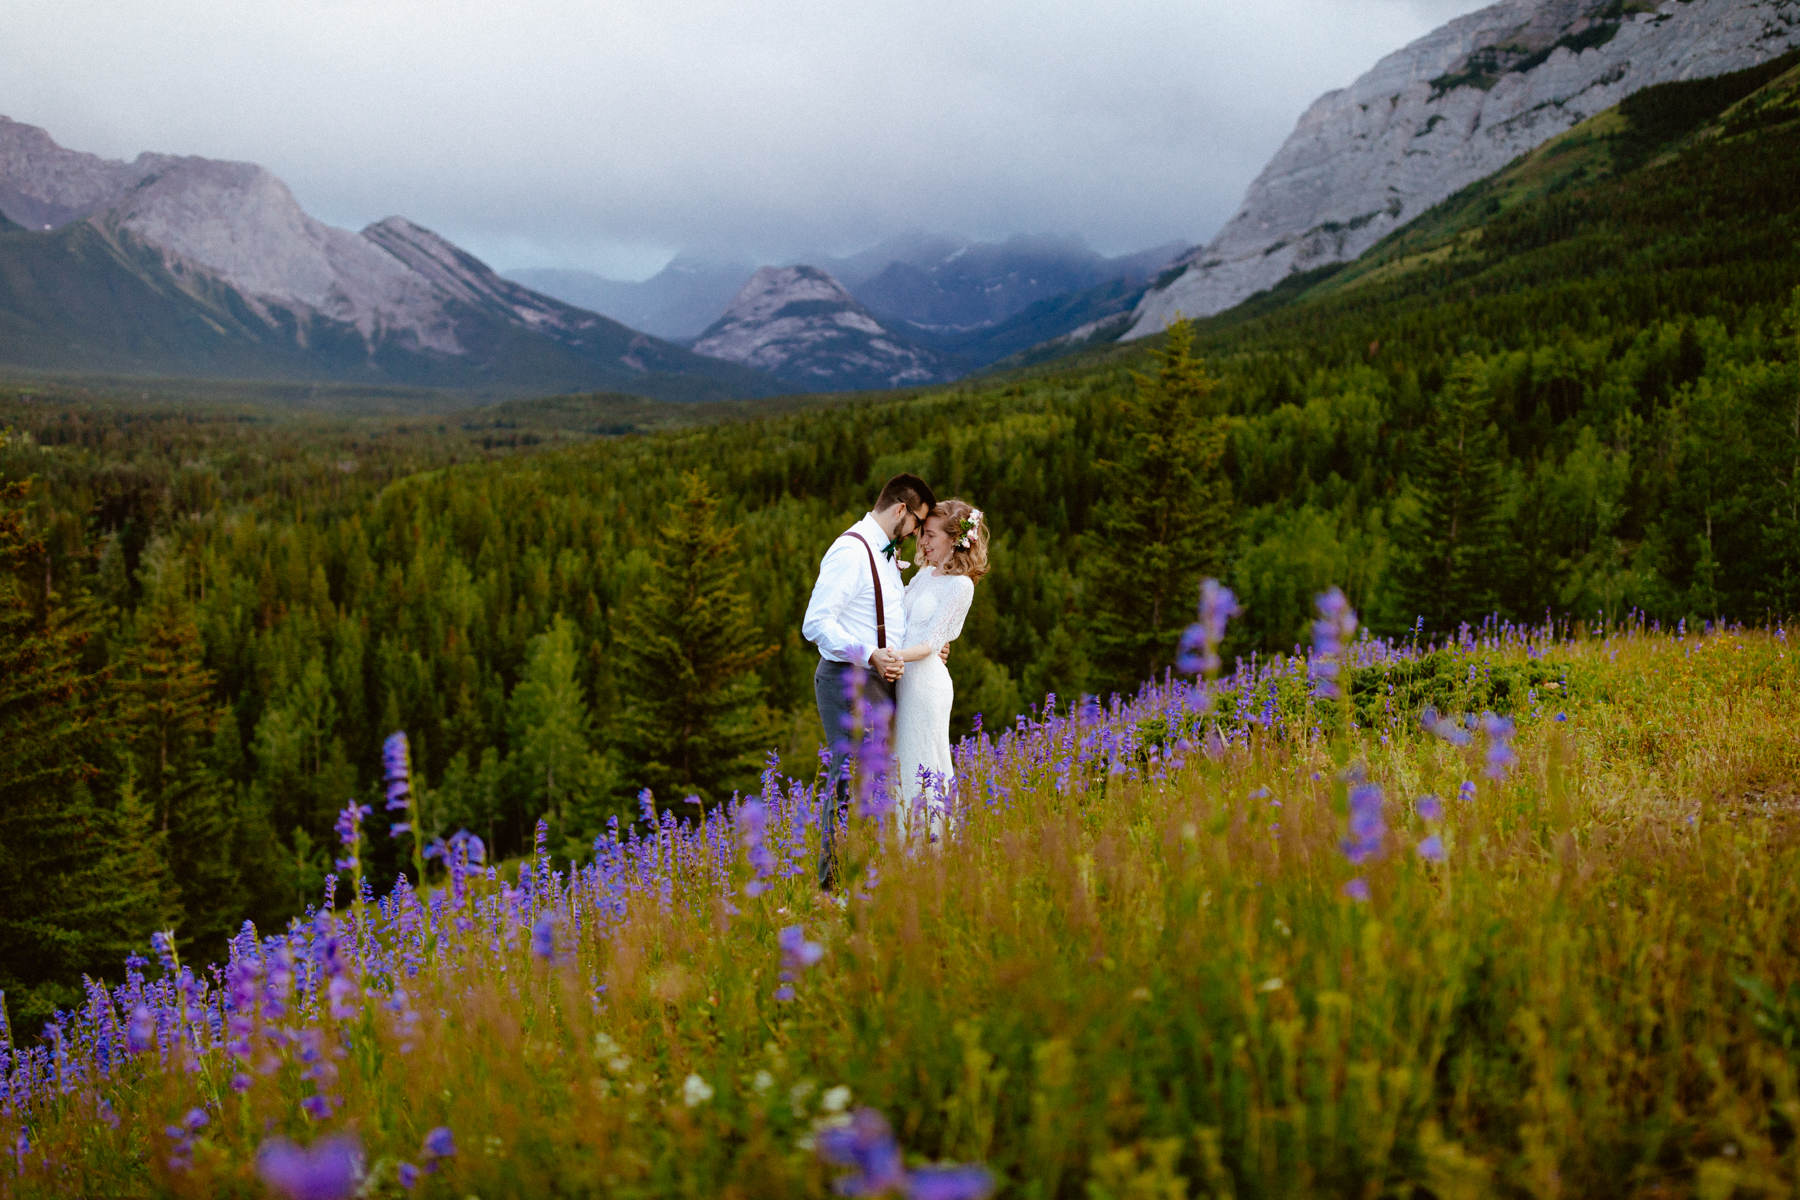 Kananaskis wedding photographers at the Pomeroy Mountain Lodge wedding venue in the Canadian Rockies